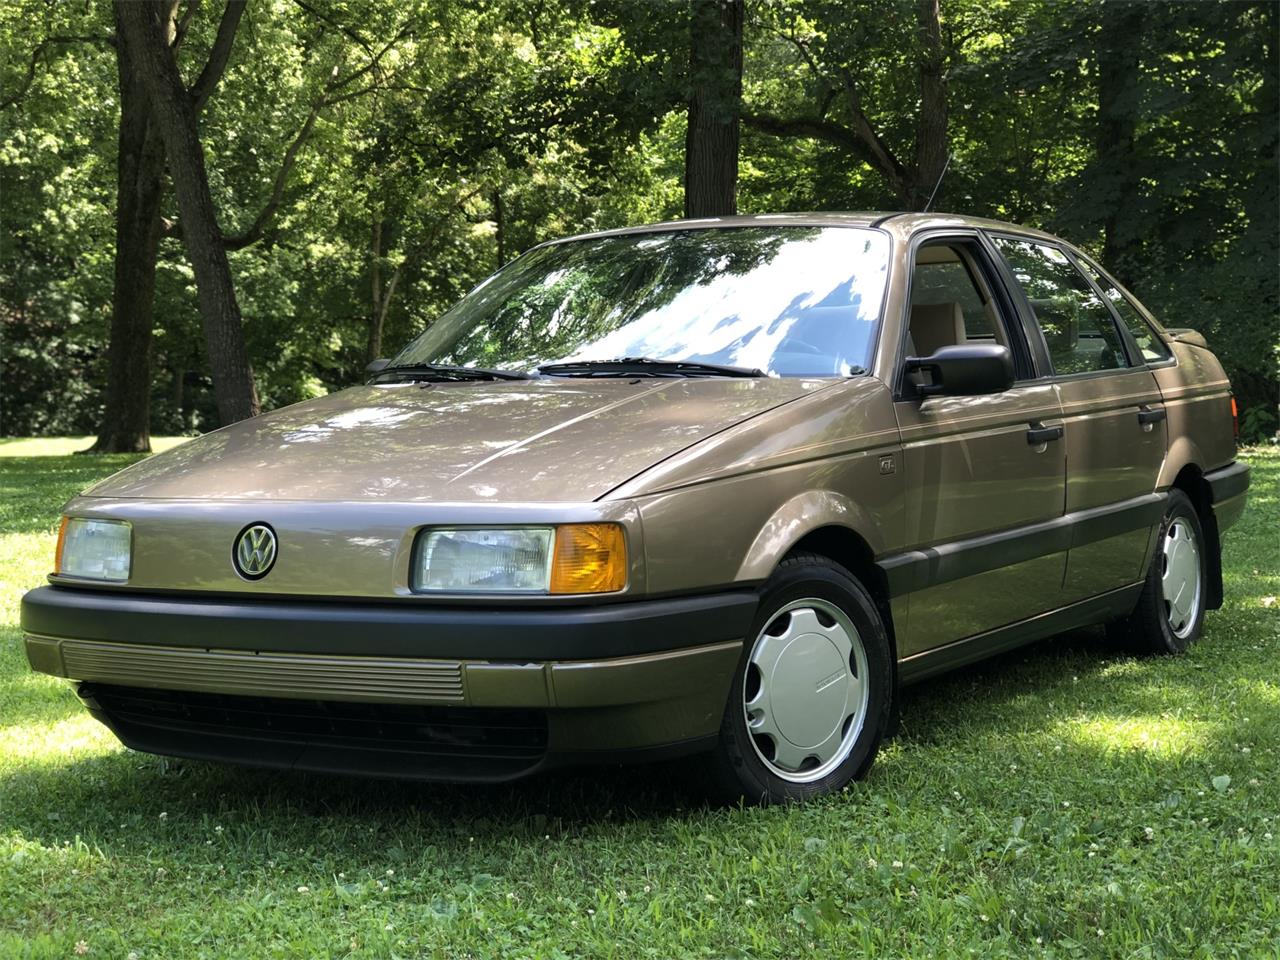 For Sale at Auction: 1990 Volkswagen Passat for sale in Dunlap, IL